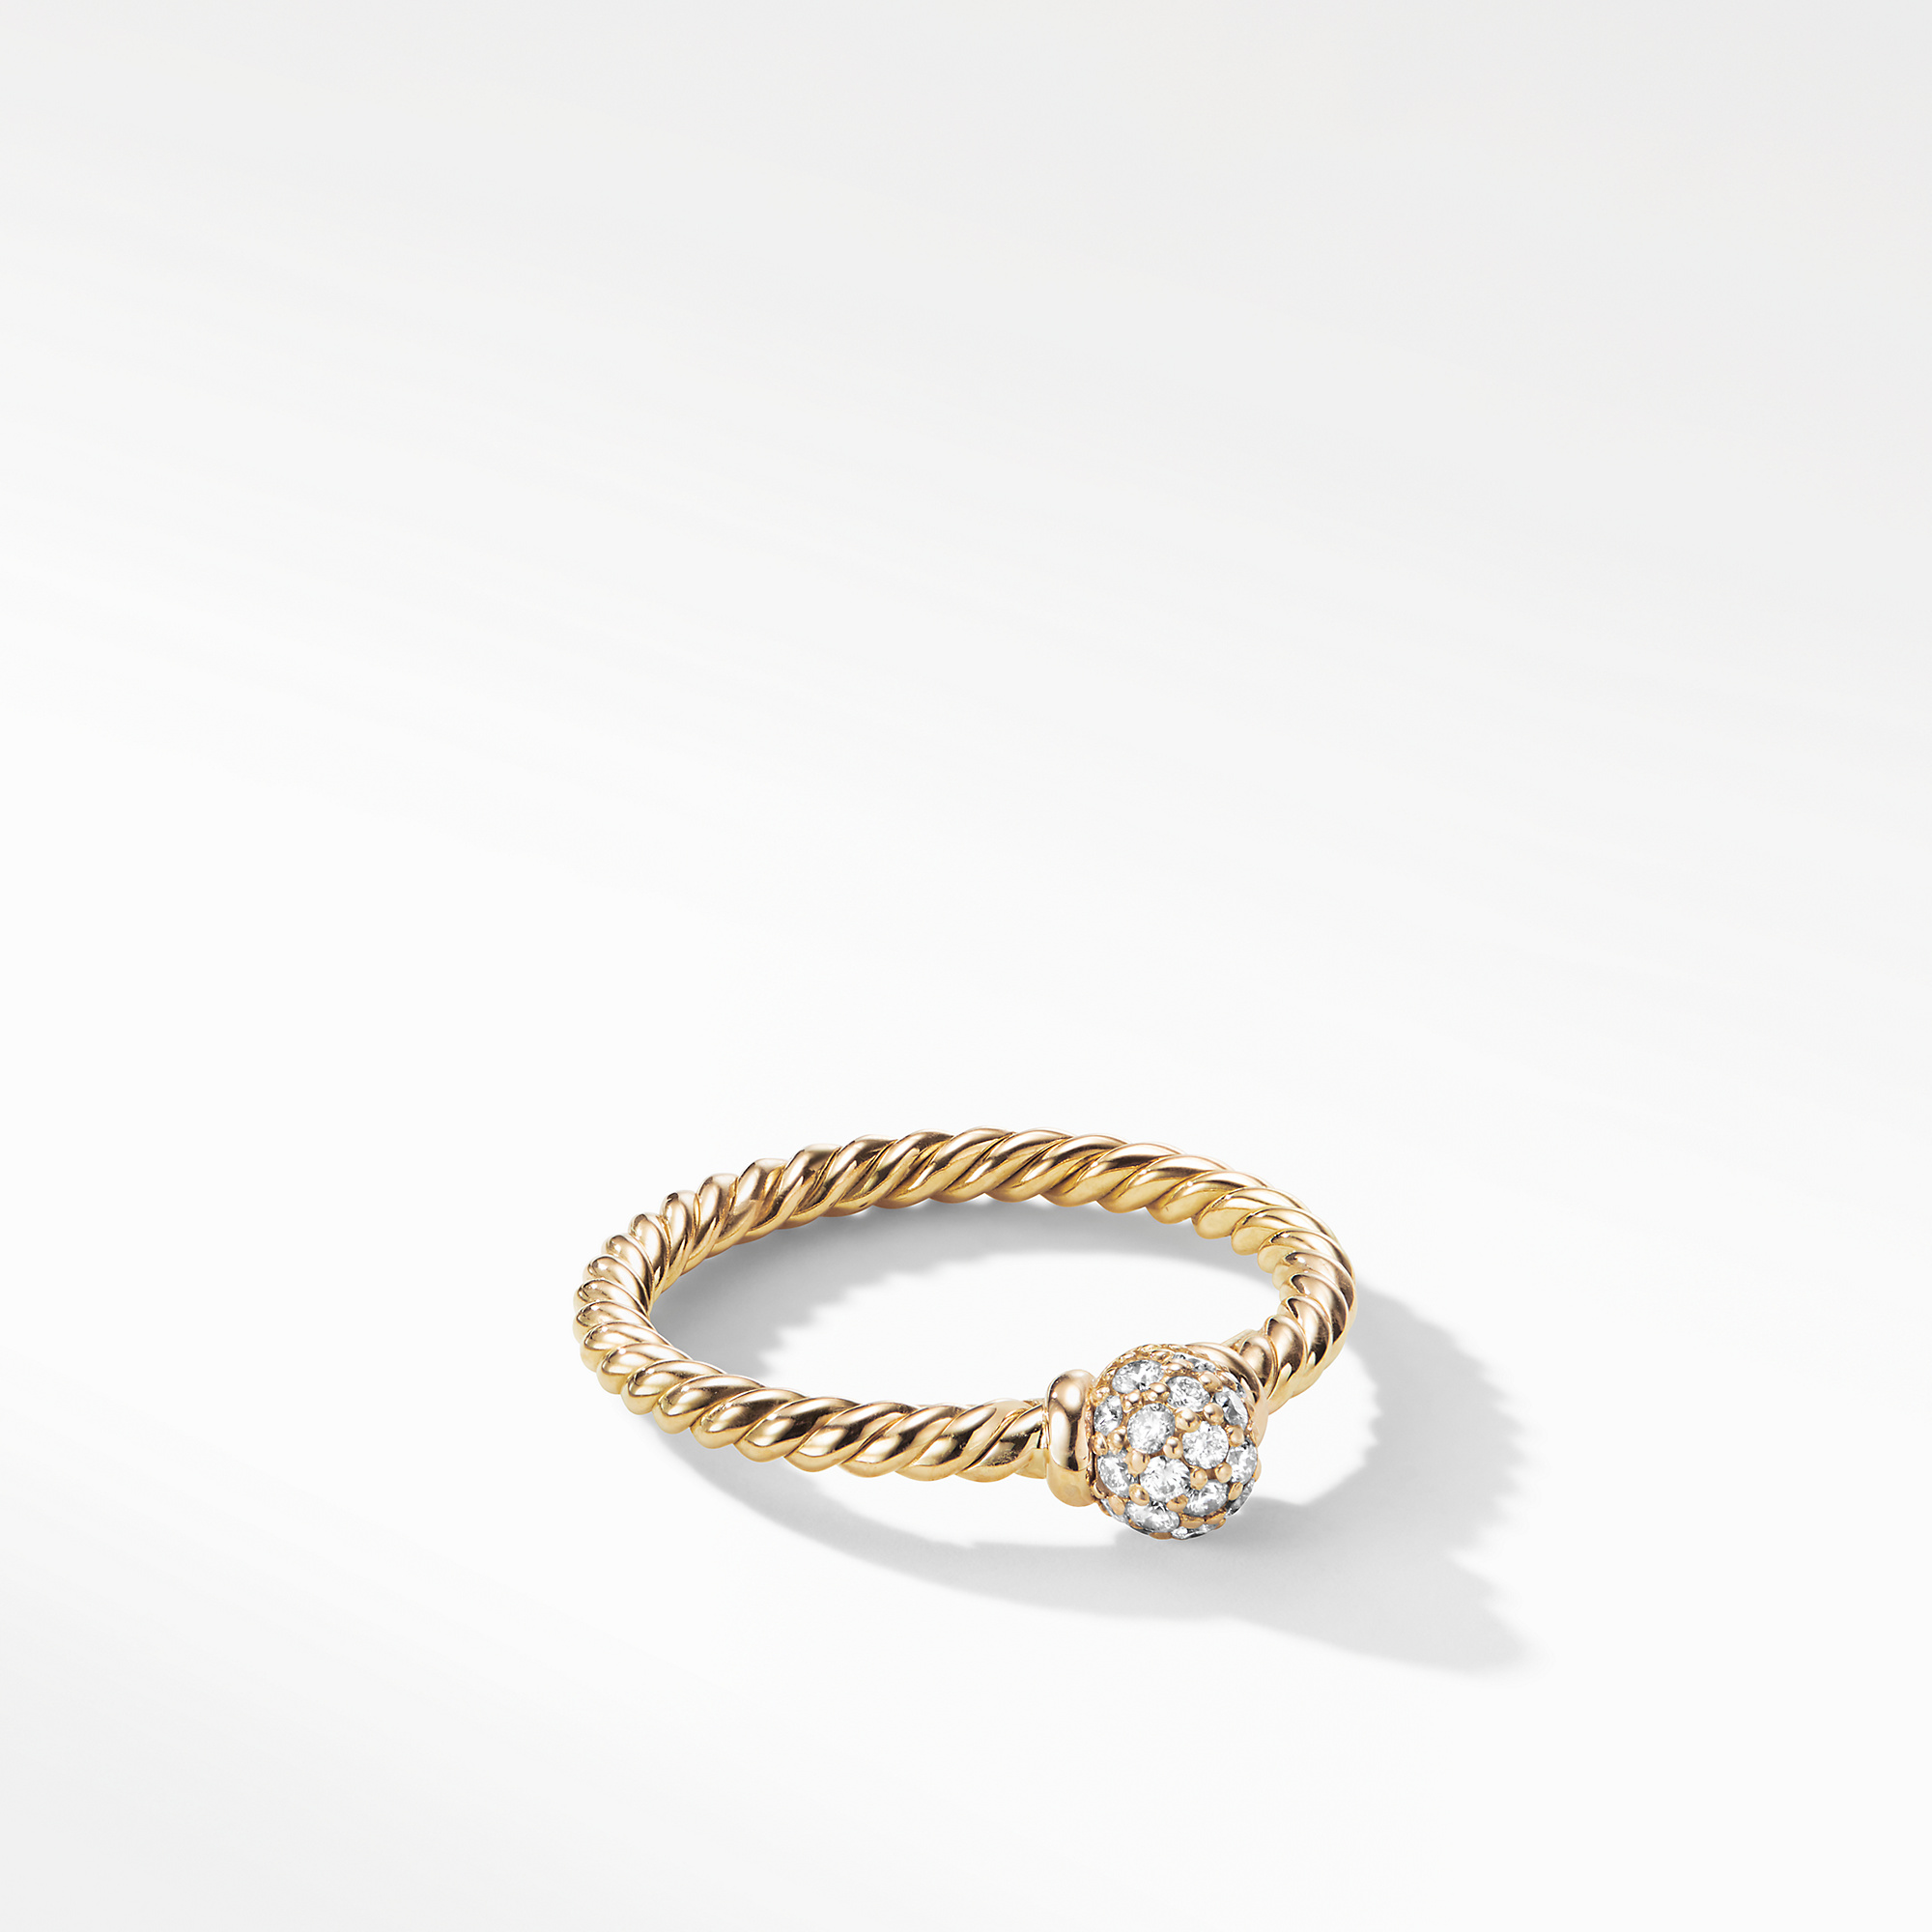 Petite Solari Station Ring with Diamonds in 18K Gold